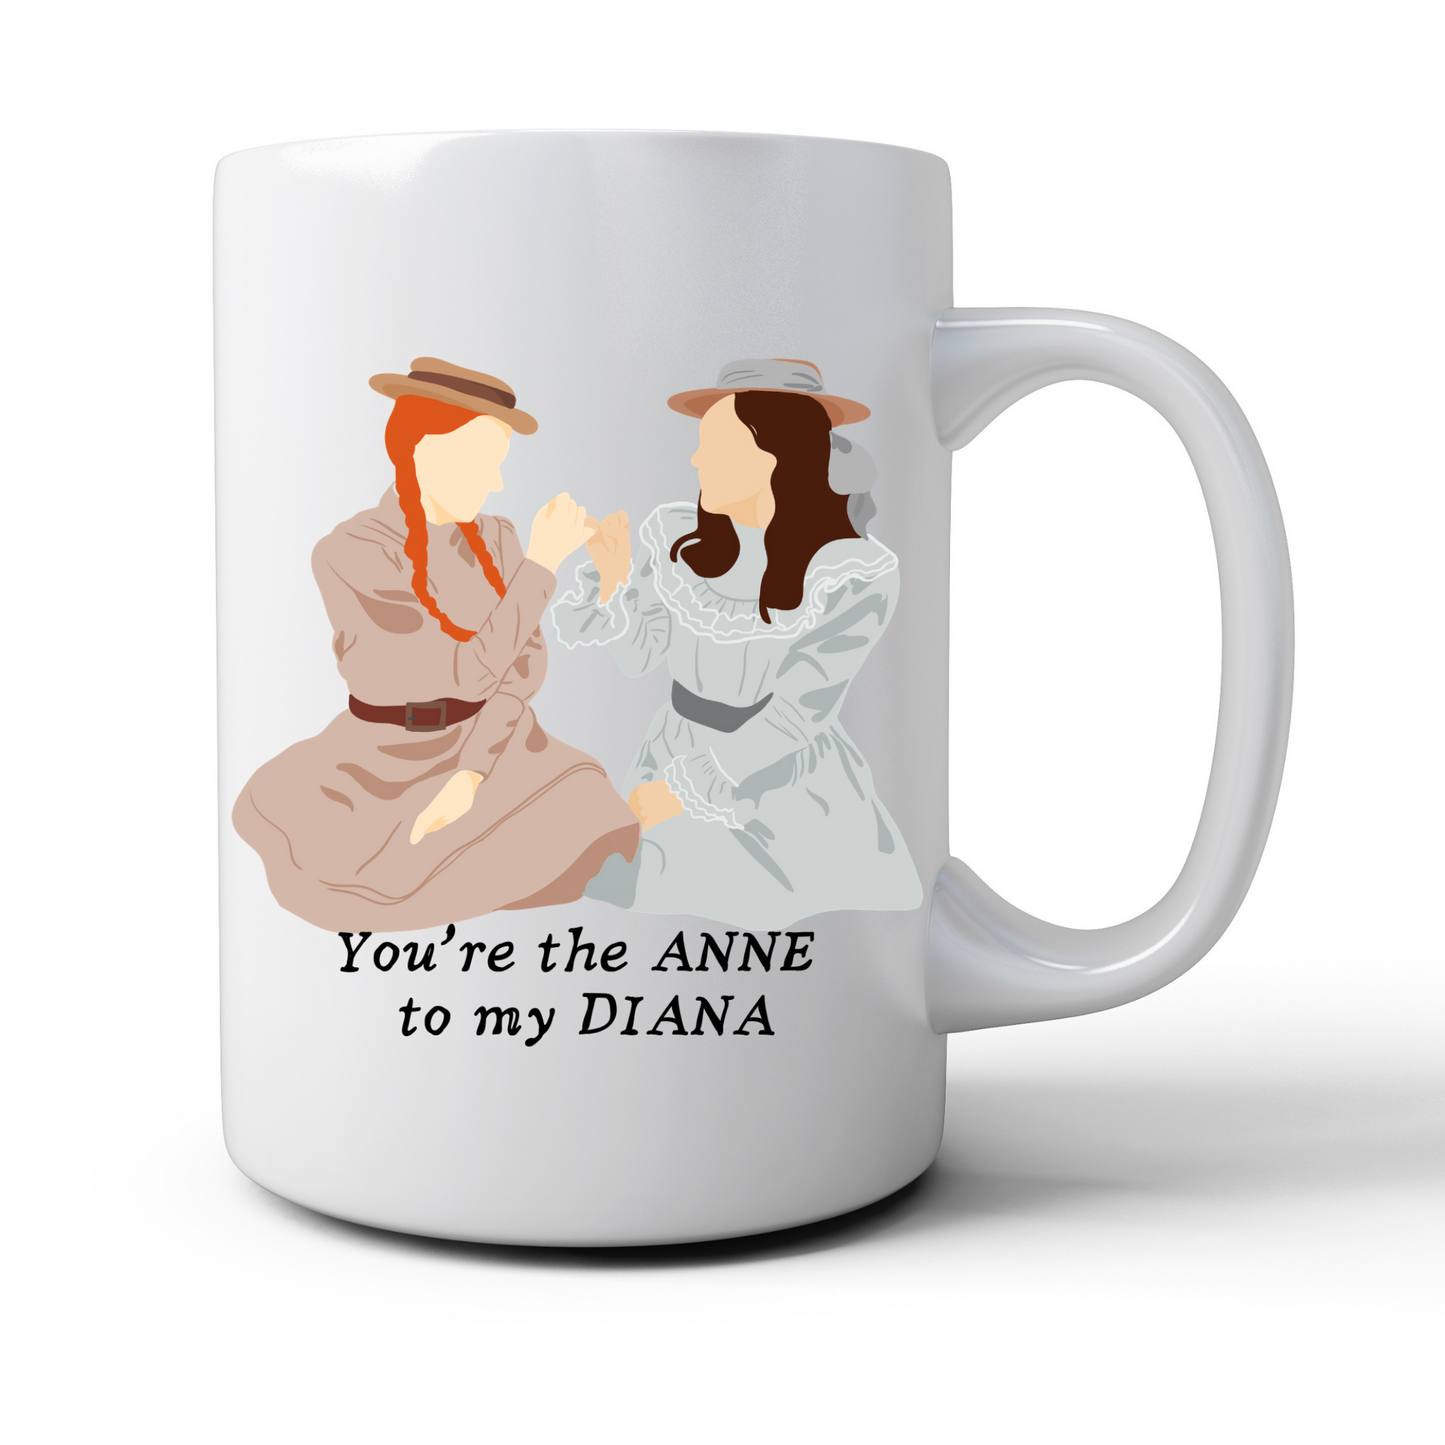 "You're the Anne to my Diana" Mug